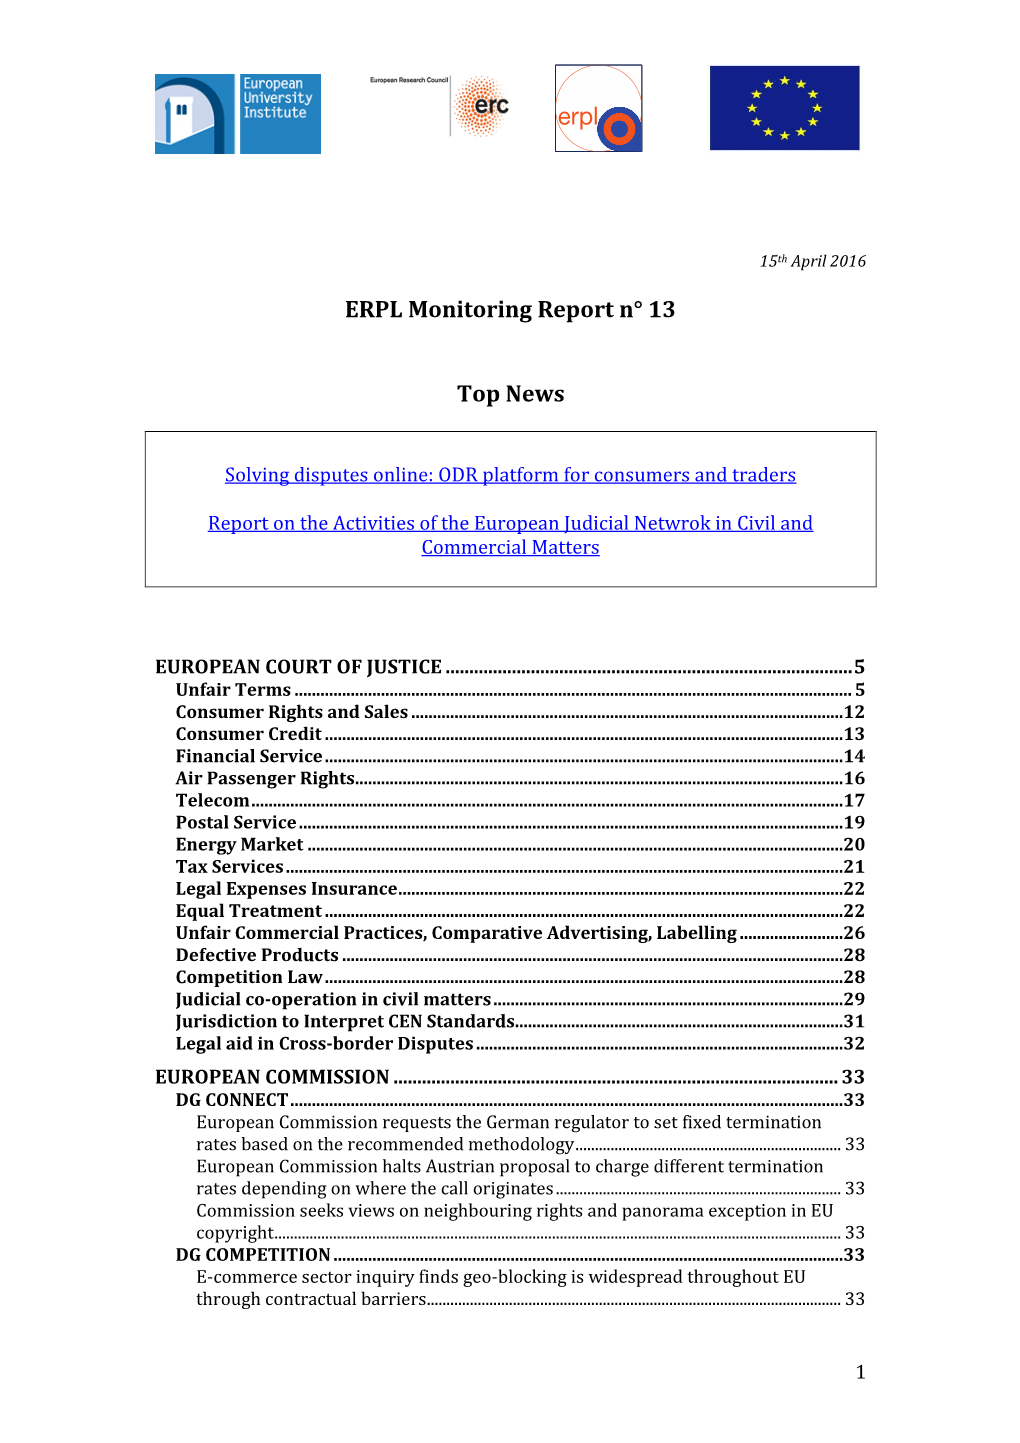 ERPL Monitoring Report N° 13 Top News